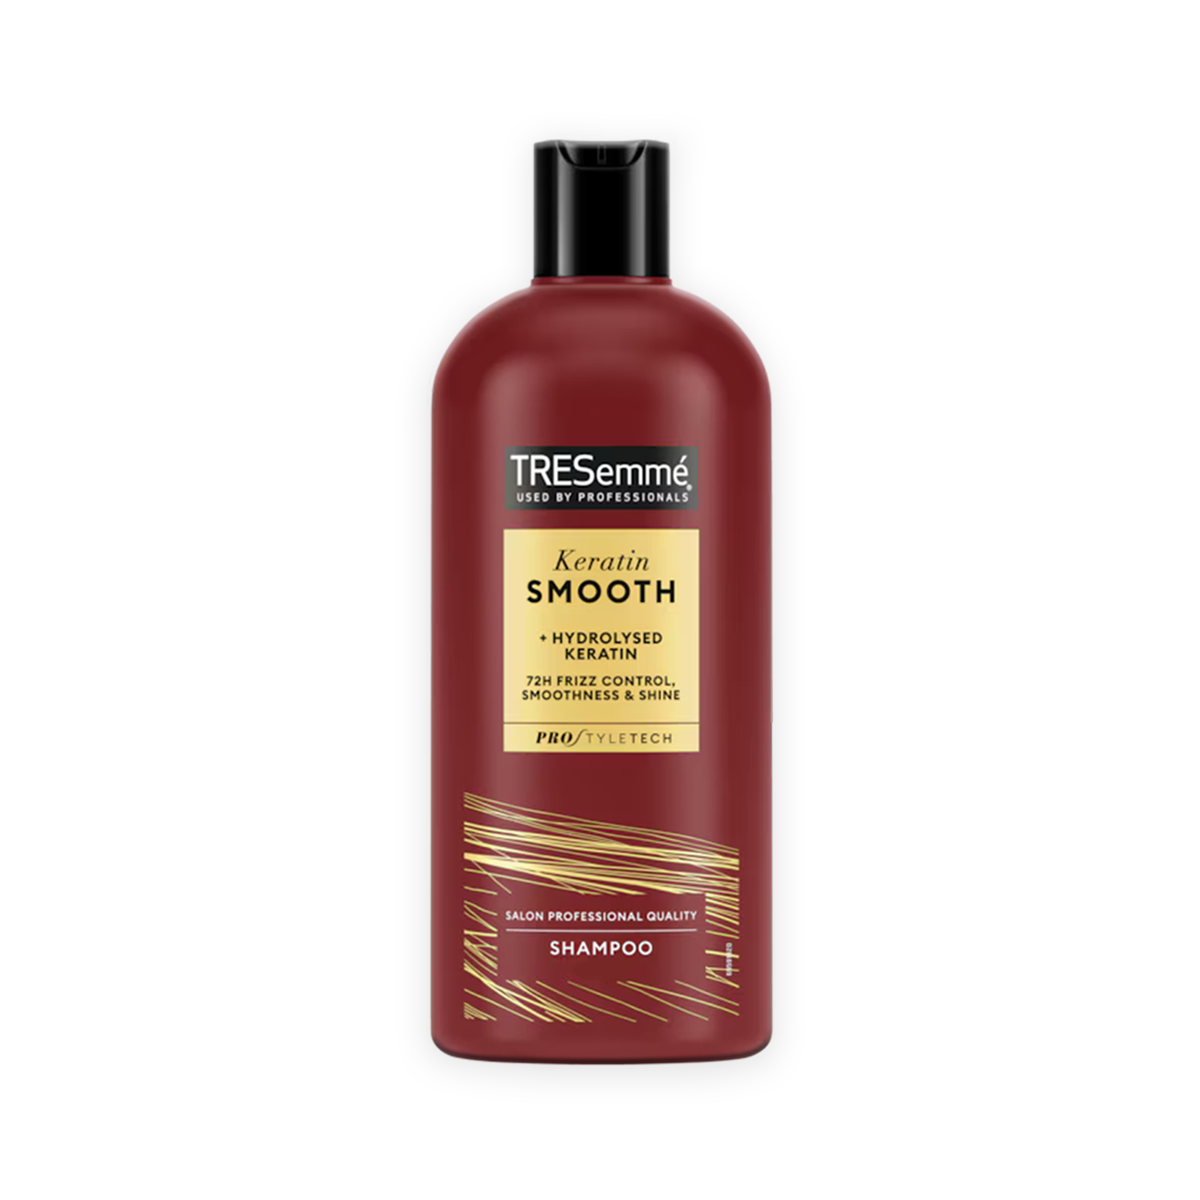 TRESemme Keratin Smooth Shampoo 680ml